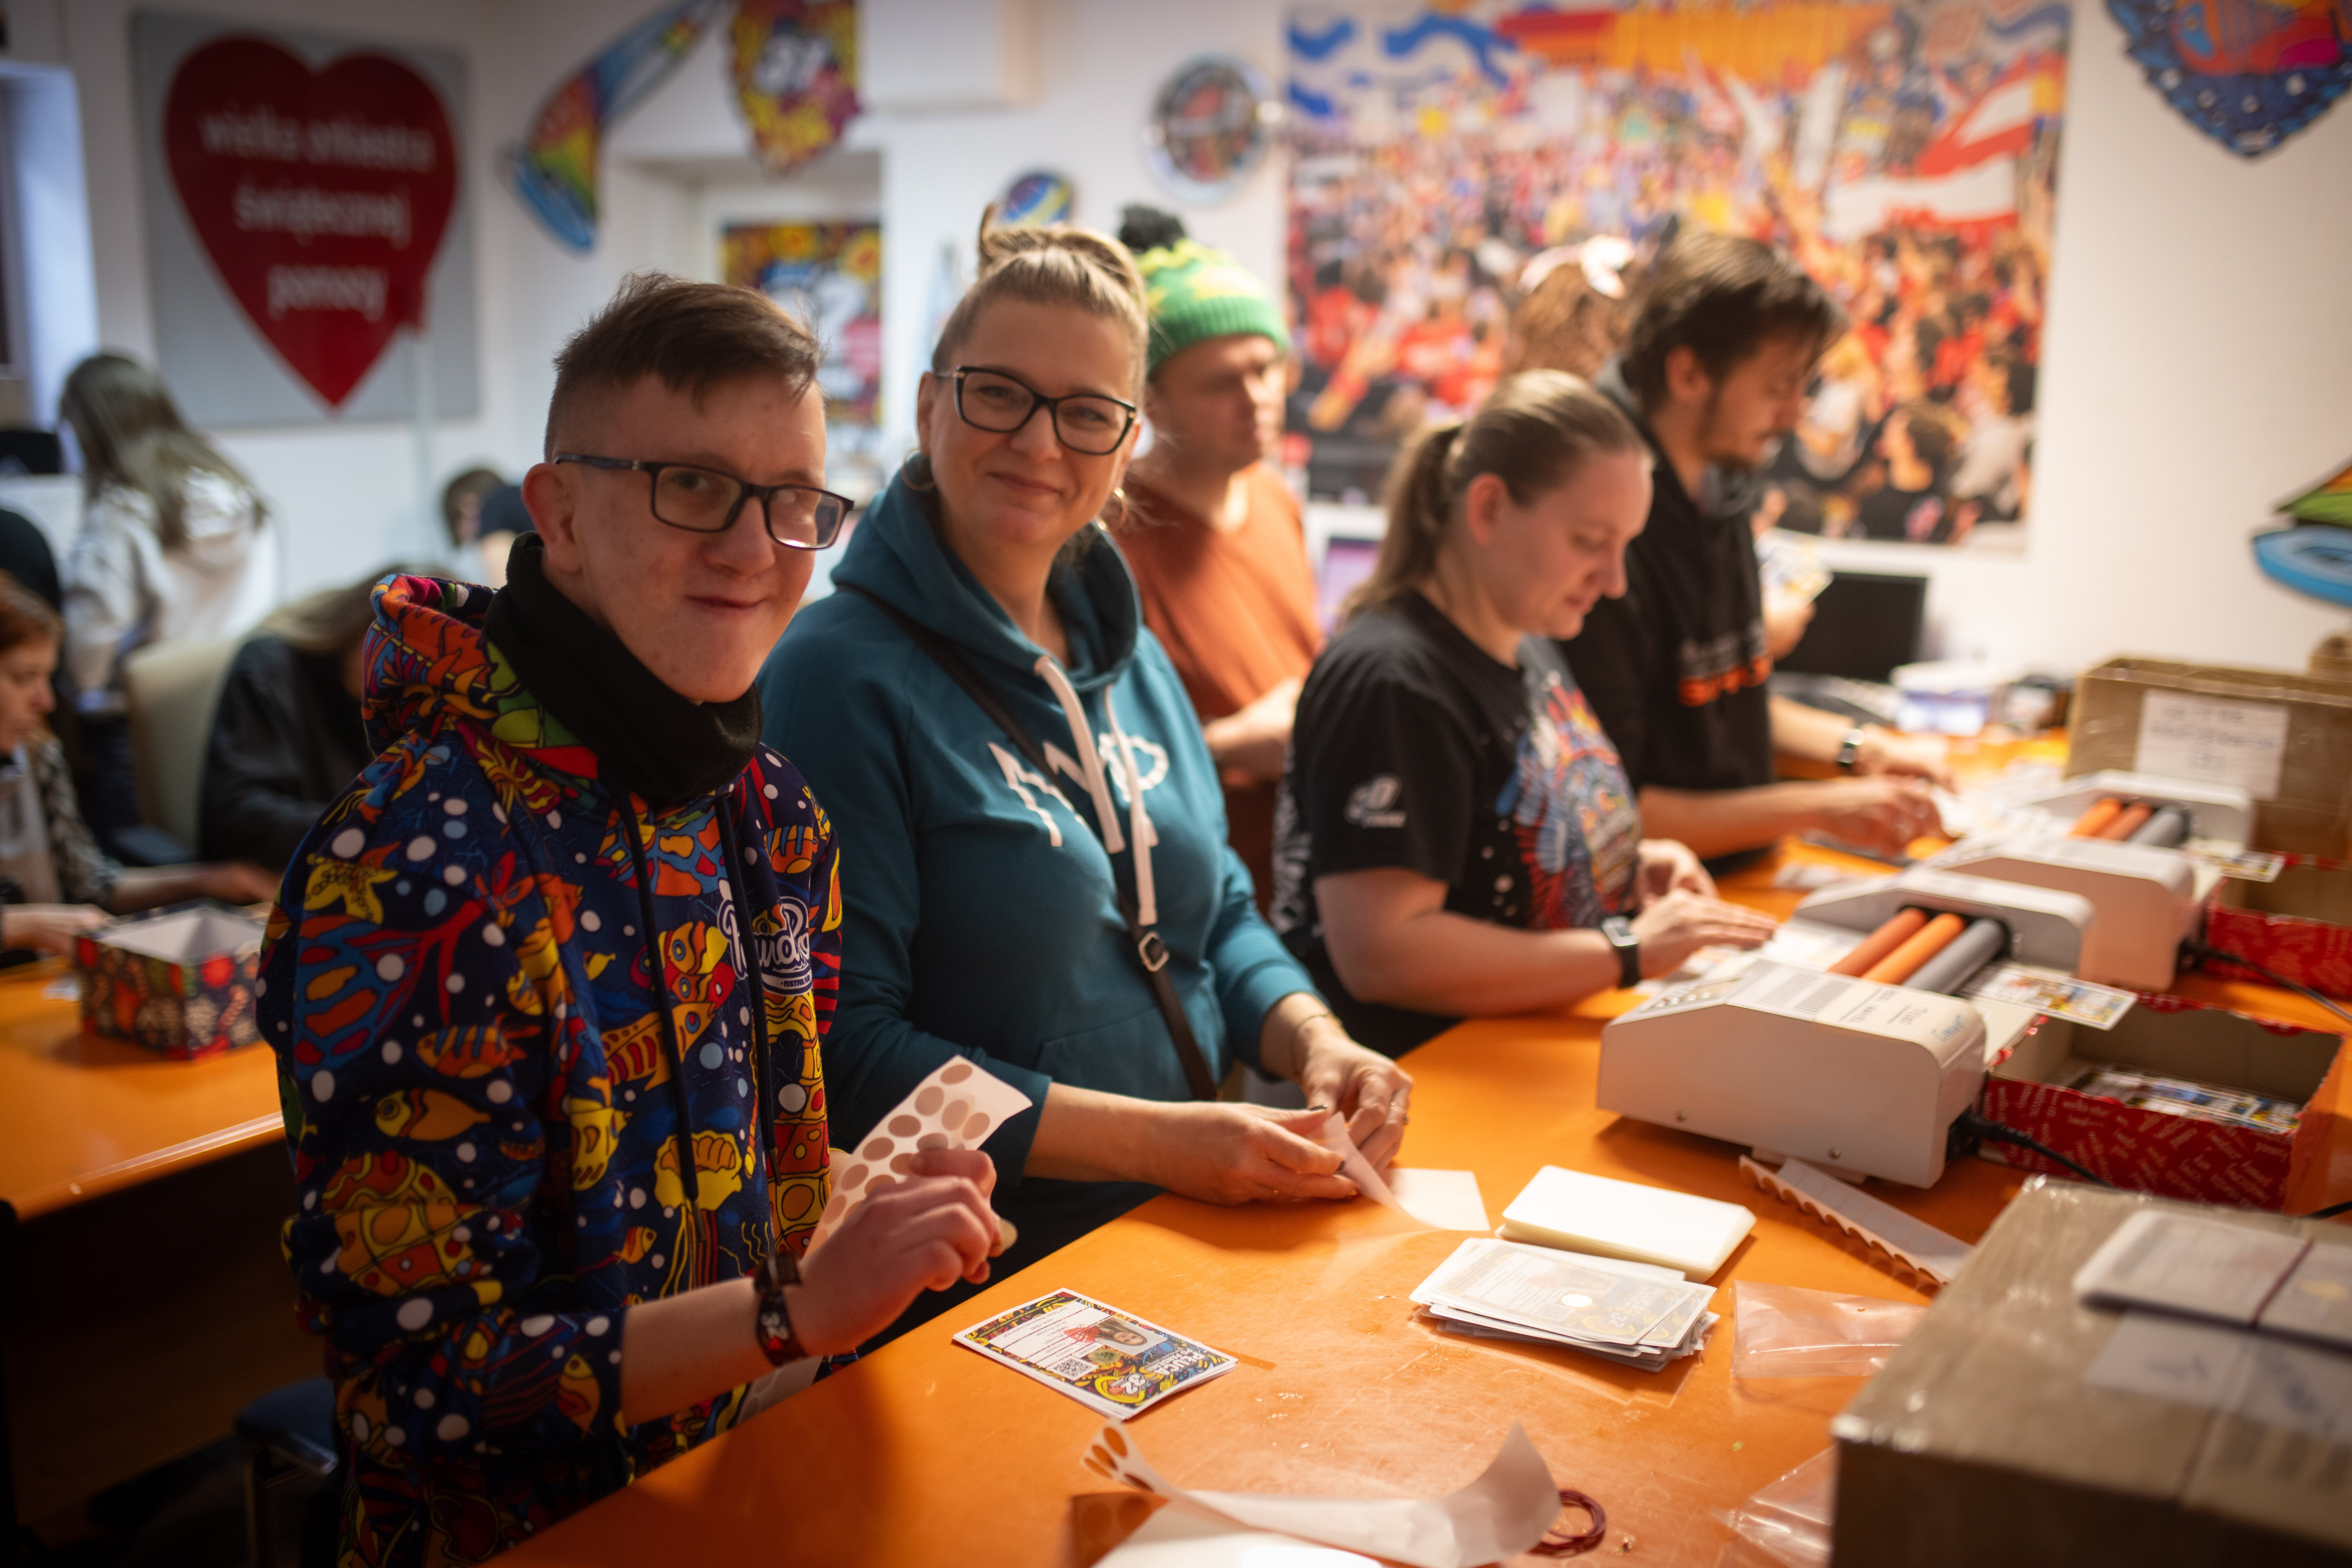 Volunteers' ID badges production at the GOCC Foundation in underway!, photo: Łukasz Widziszowski